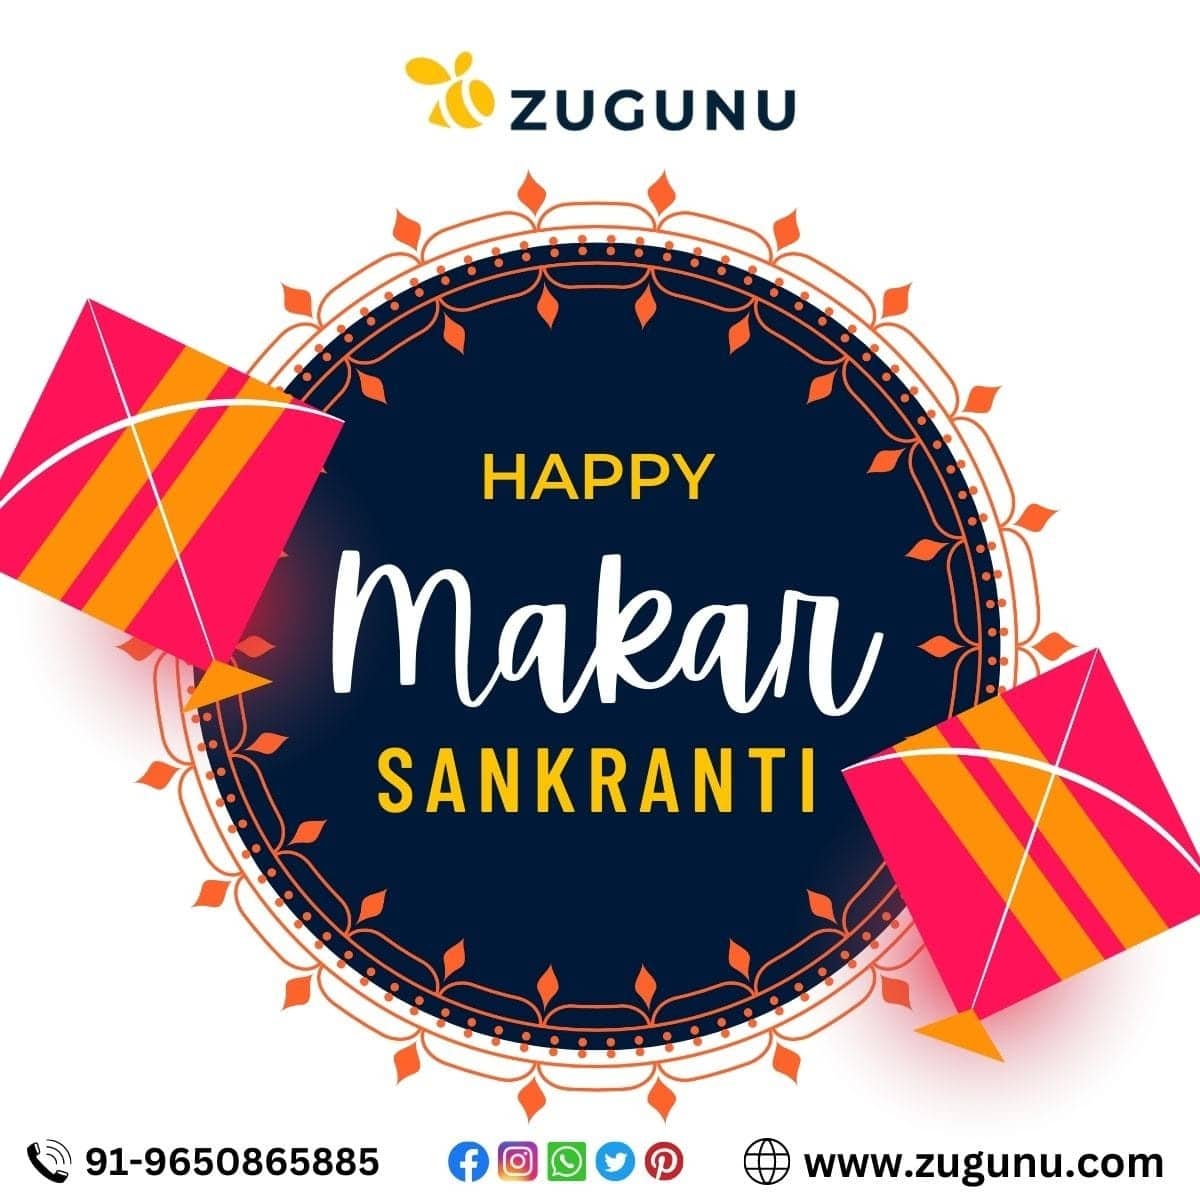 Wishing You A Very Happy Makar Sankranti 4